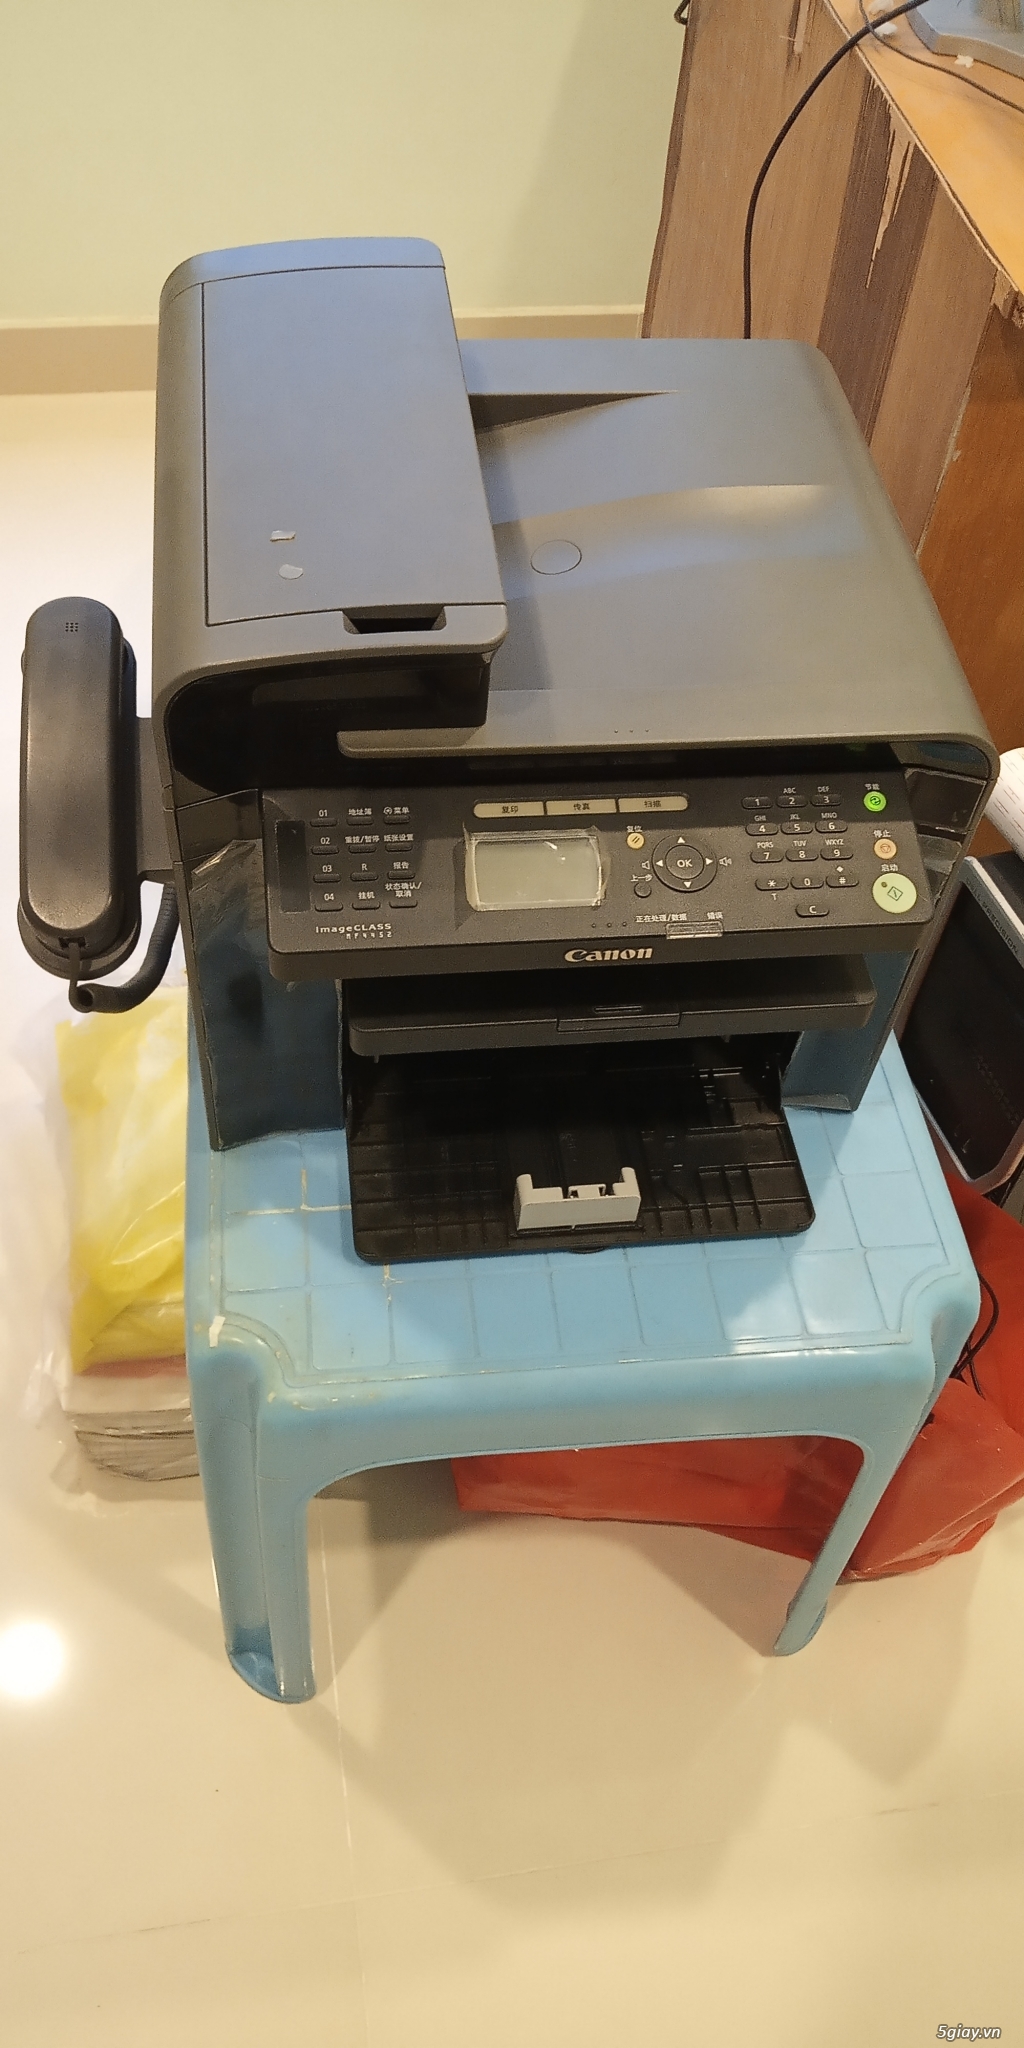 Cần bán 1 máy in CANON 4452 đa chức năng, Coppy, Scan, Fax, In,